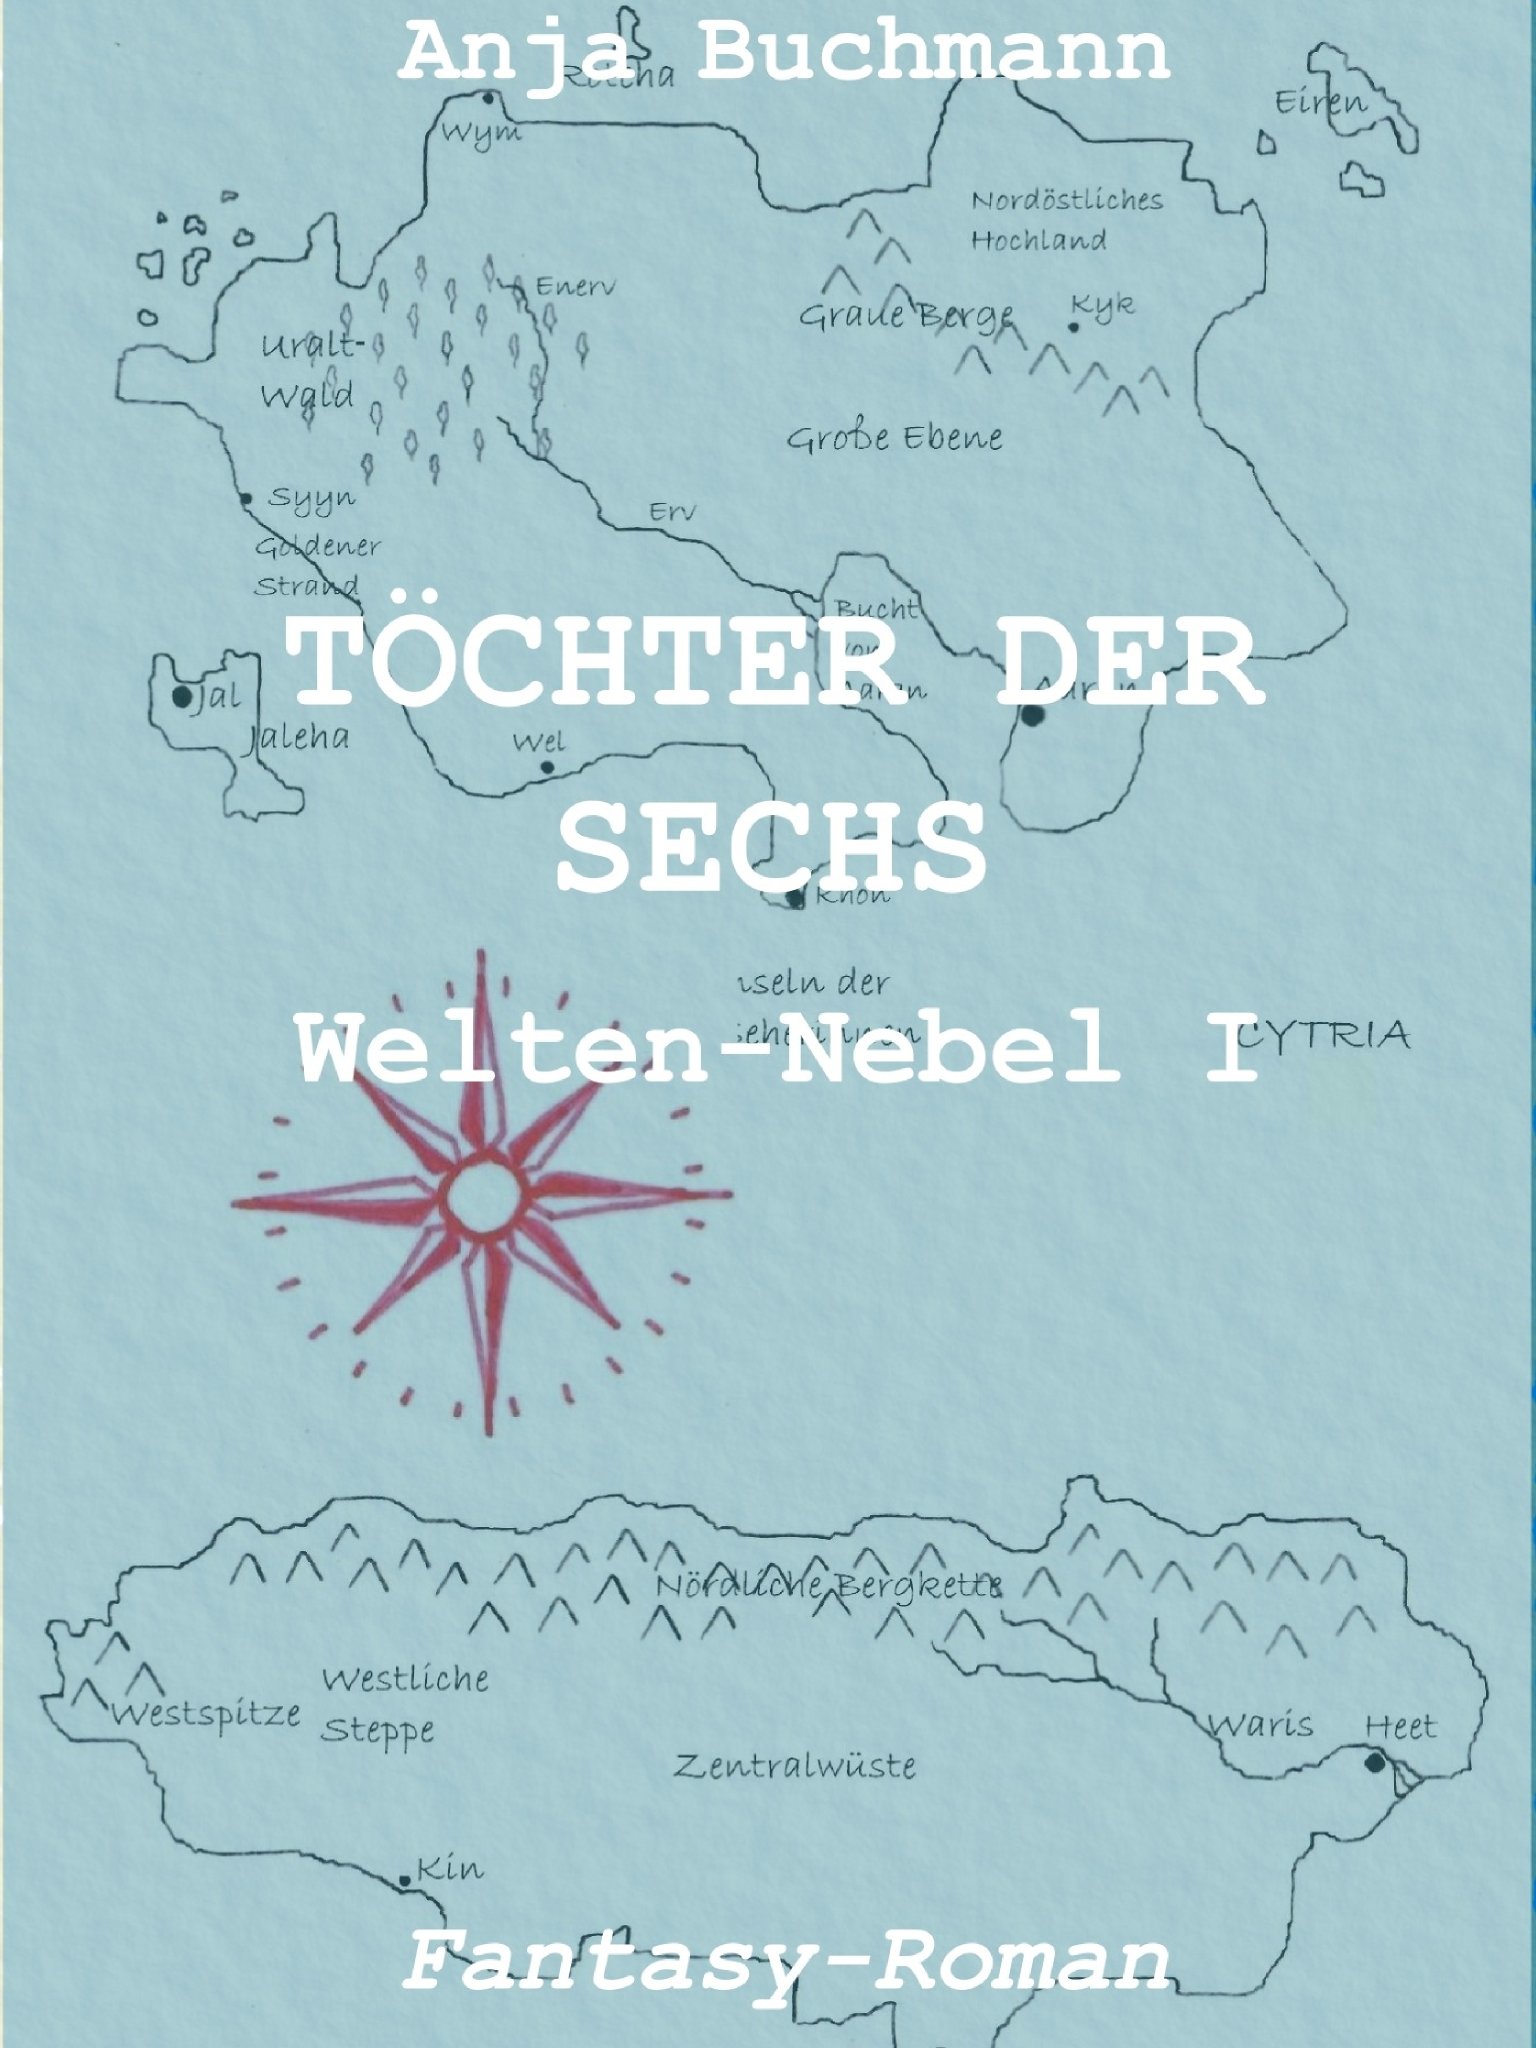 Weltennebel 1: Töchter der Sechs, Cover, Genre: Fantasy, erster Band der Tetralogie Welten-Nebel, Weltennebel